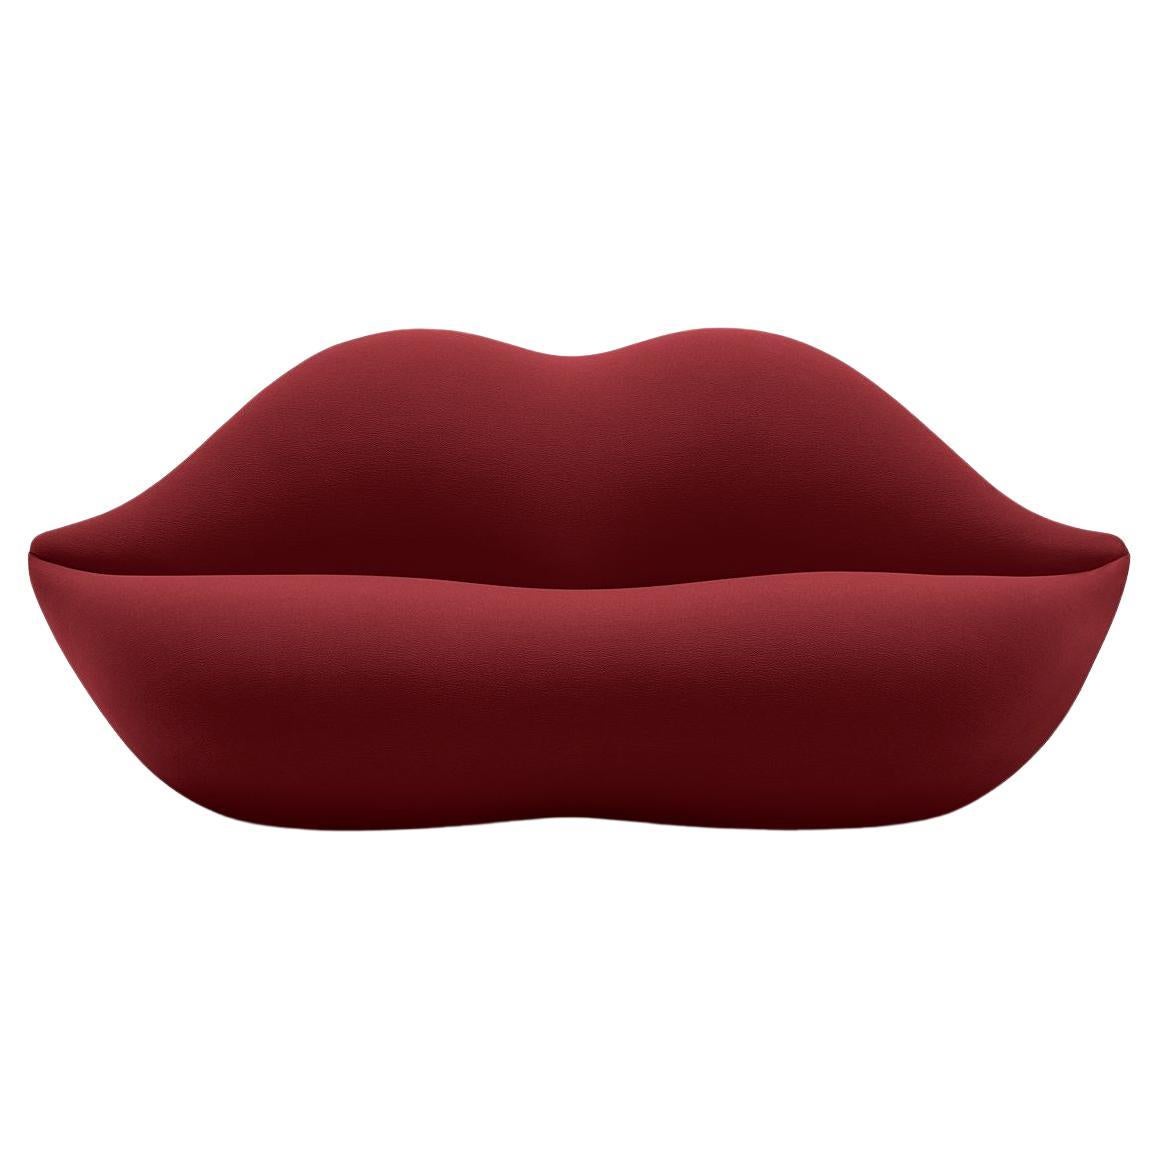 Gufram, Bocca Lip-Shaped Sofa, Cherry, by Studio 65 For Sale